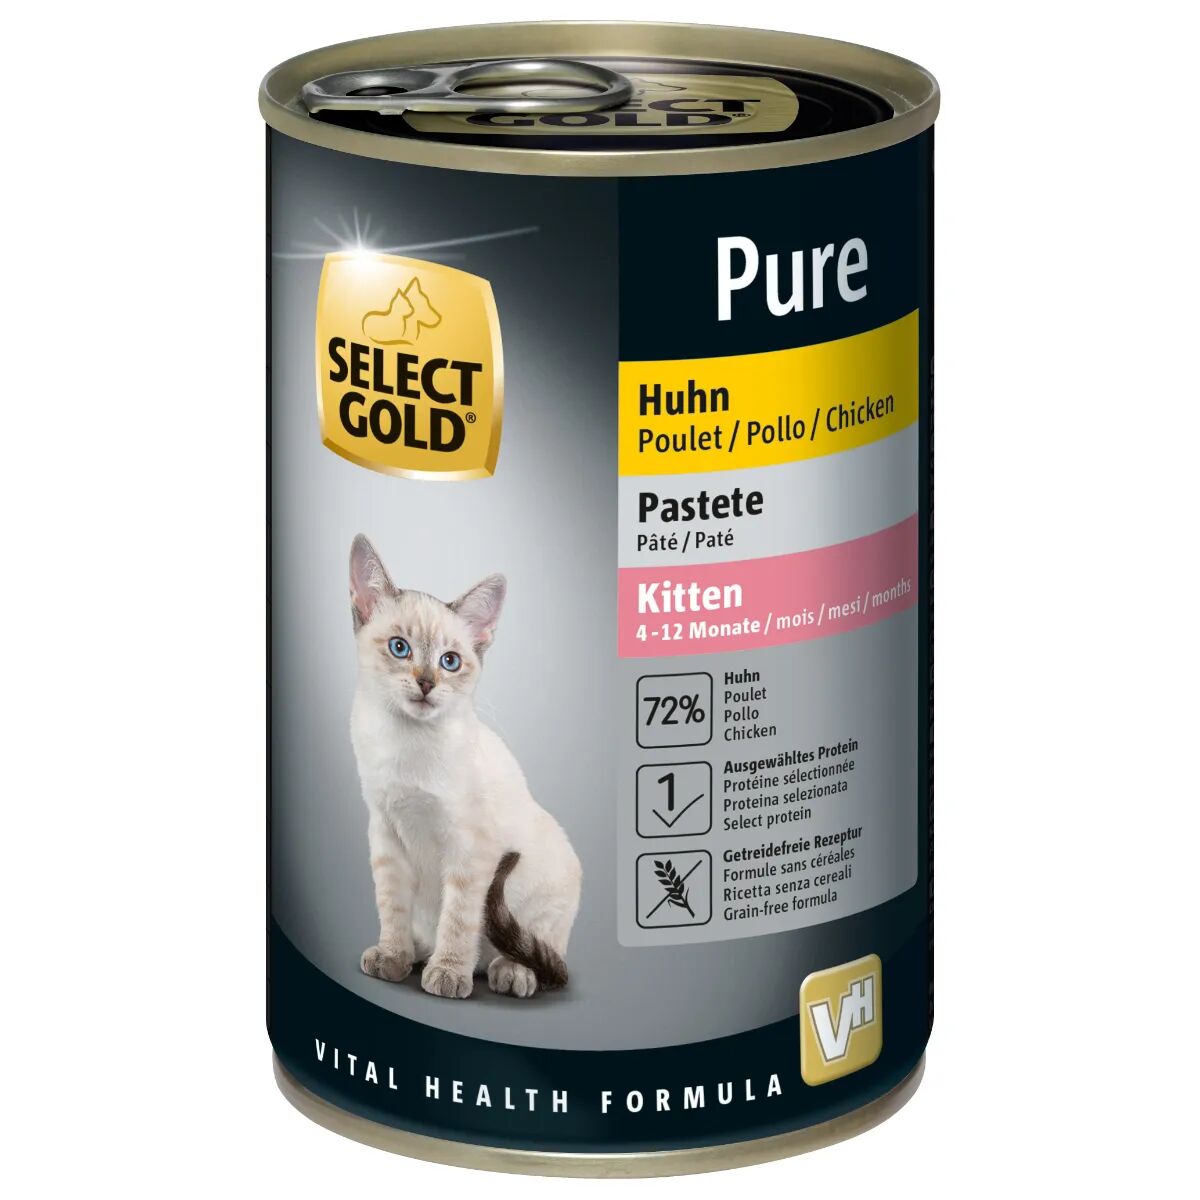 SELECT GOLD Pure Kitten Lattina 400G POLLO